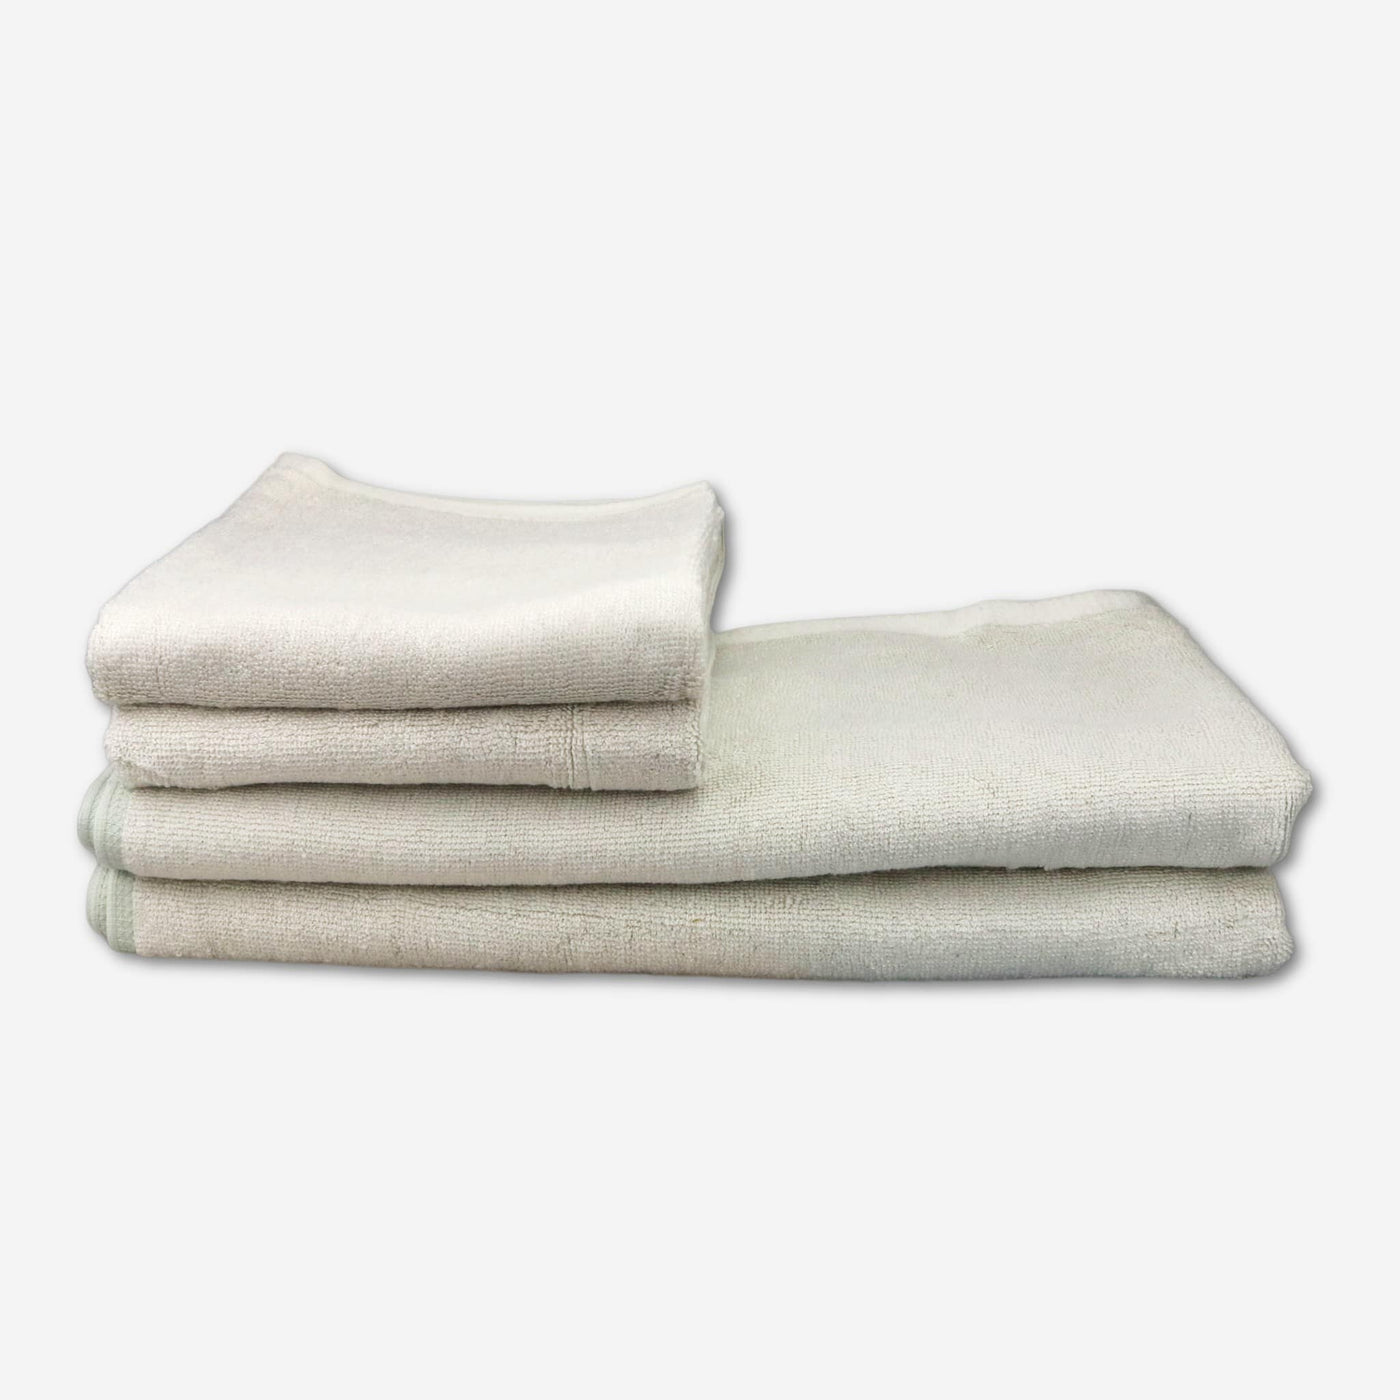 White bamboo towel